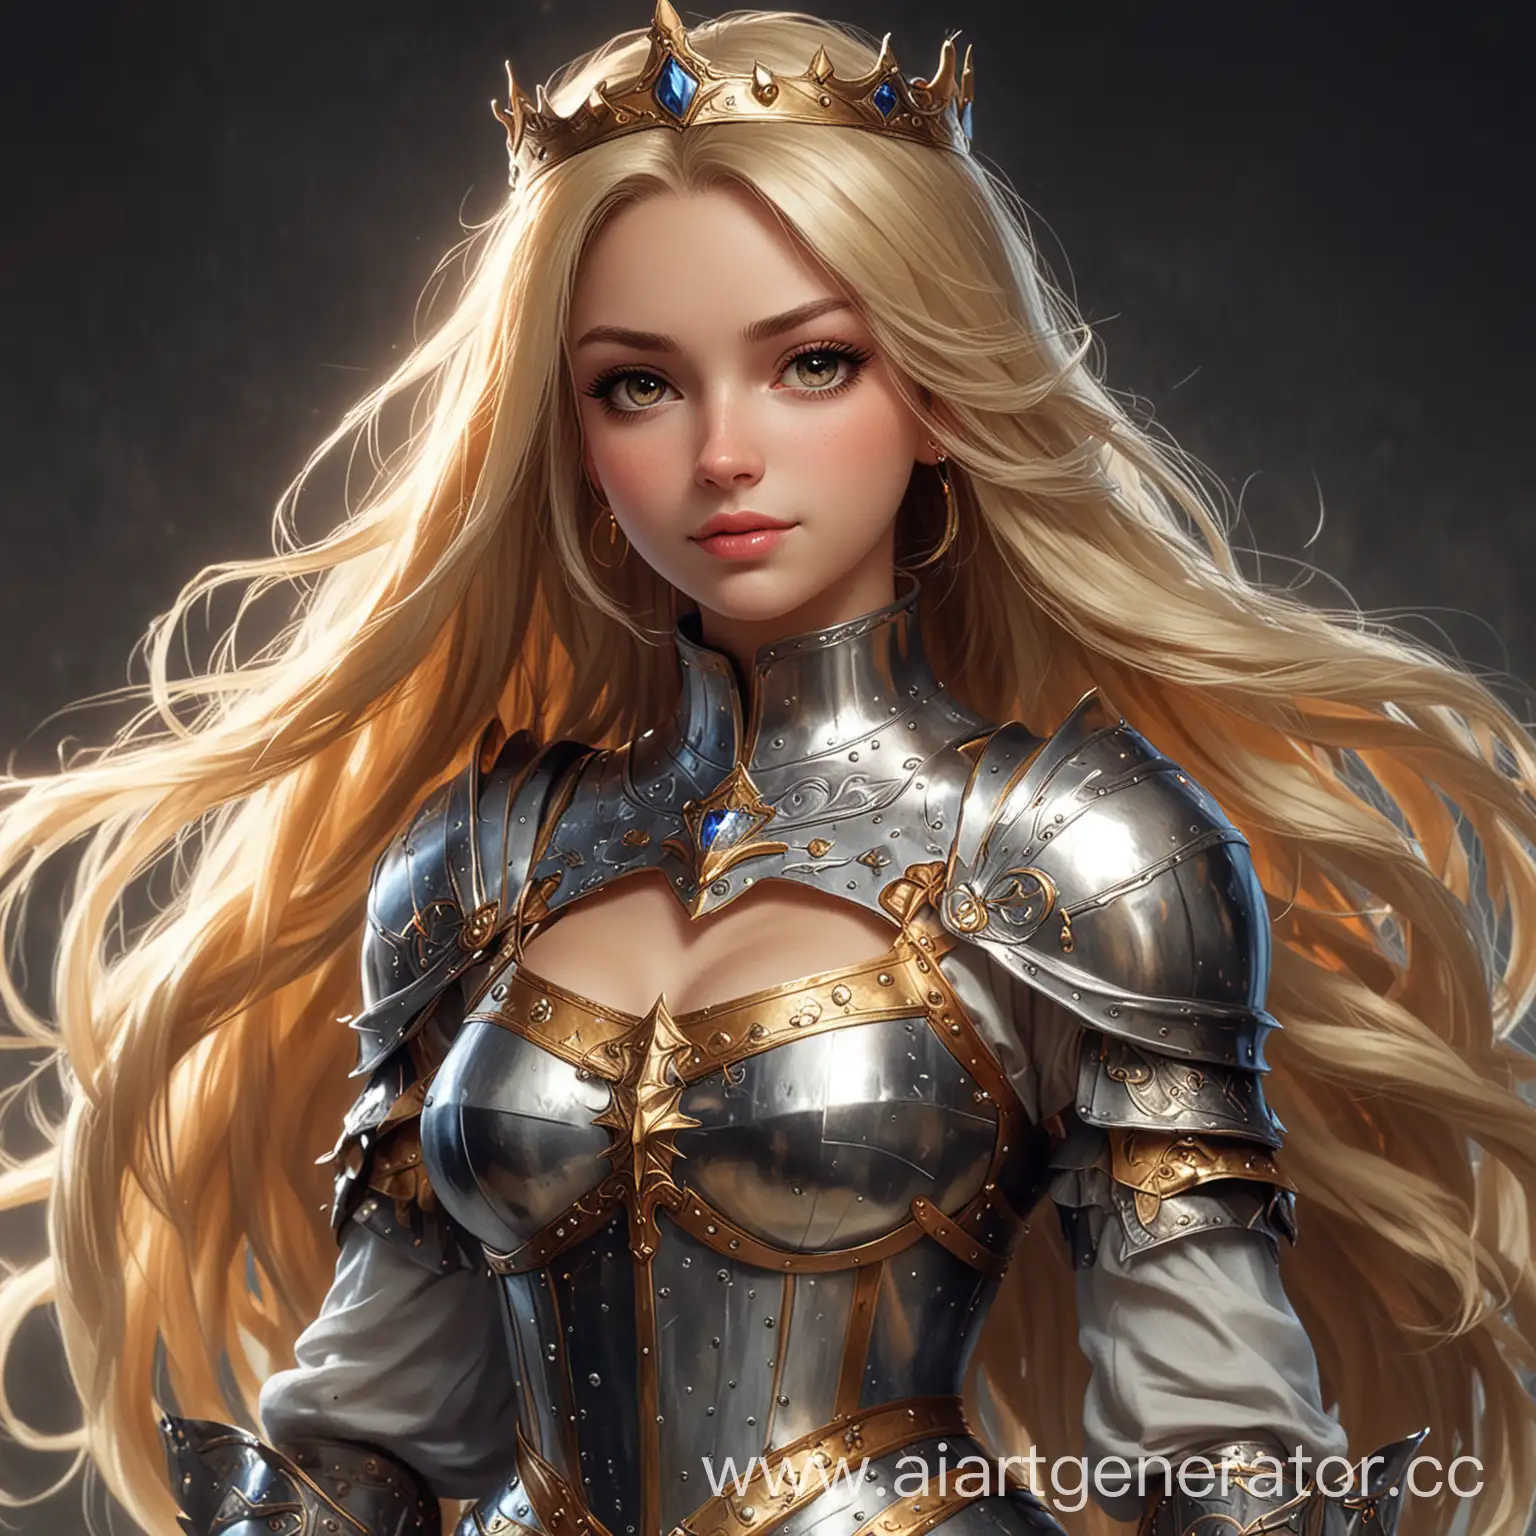 Medieval-Fantasy-Adult-Princess-in-Knights-Era